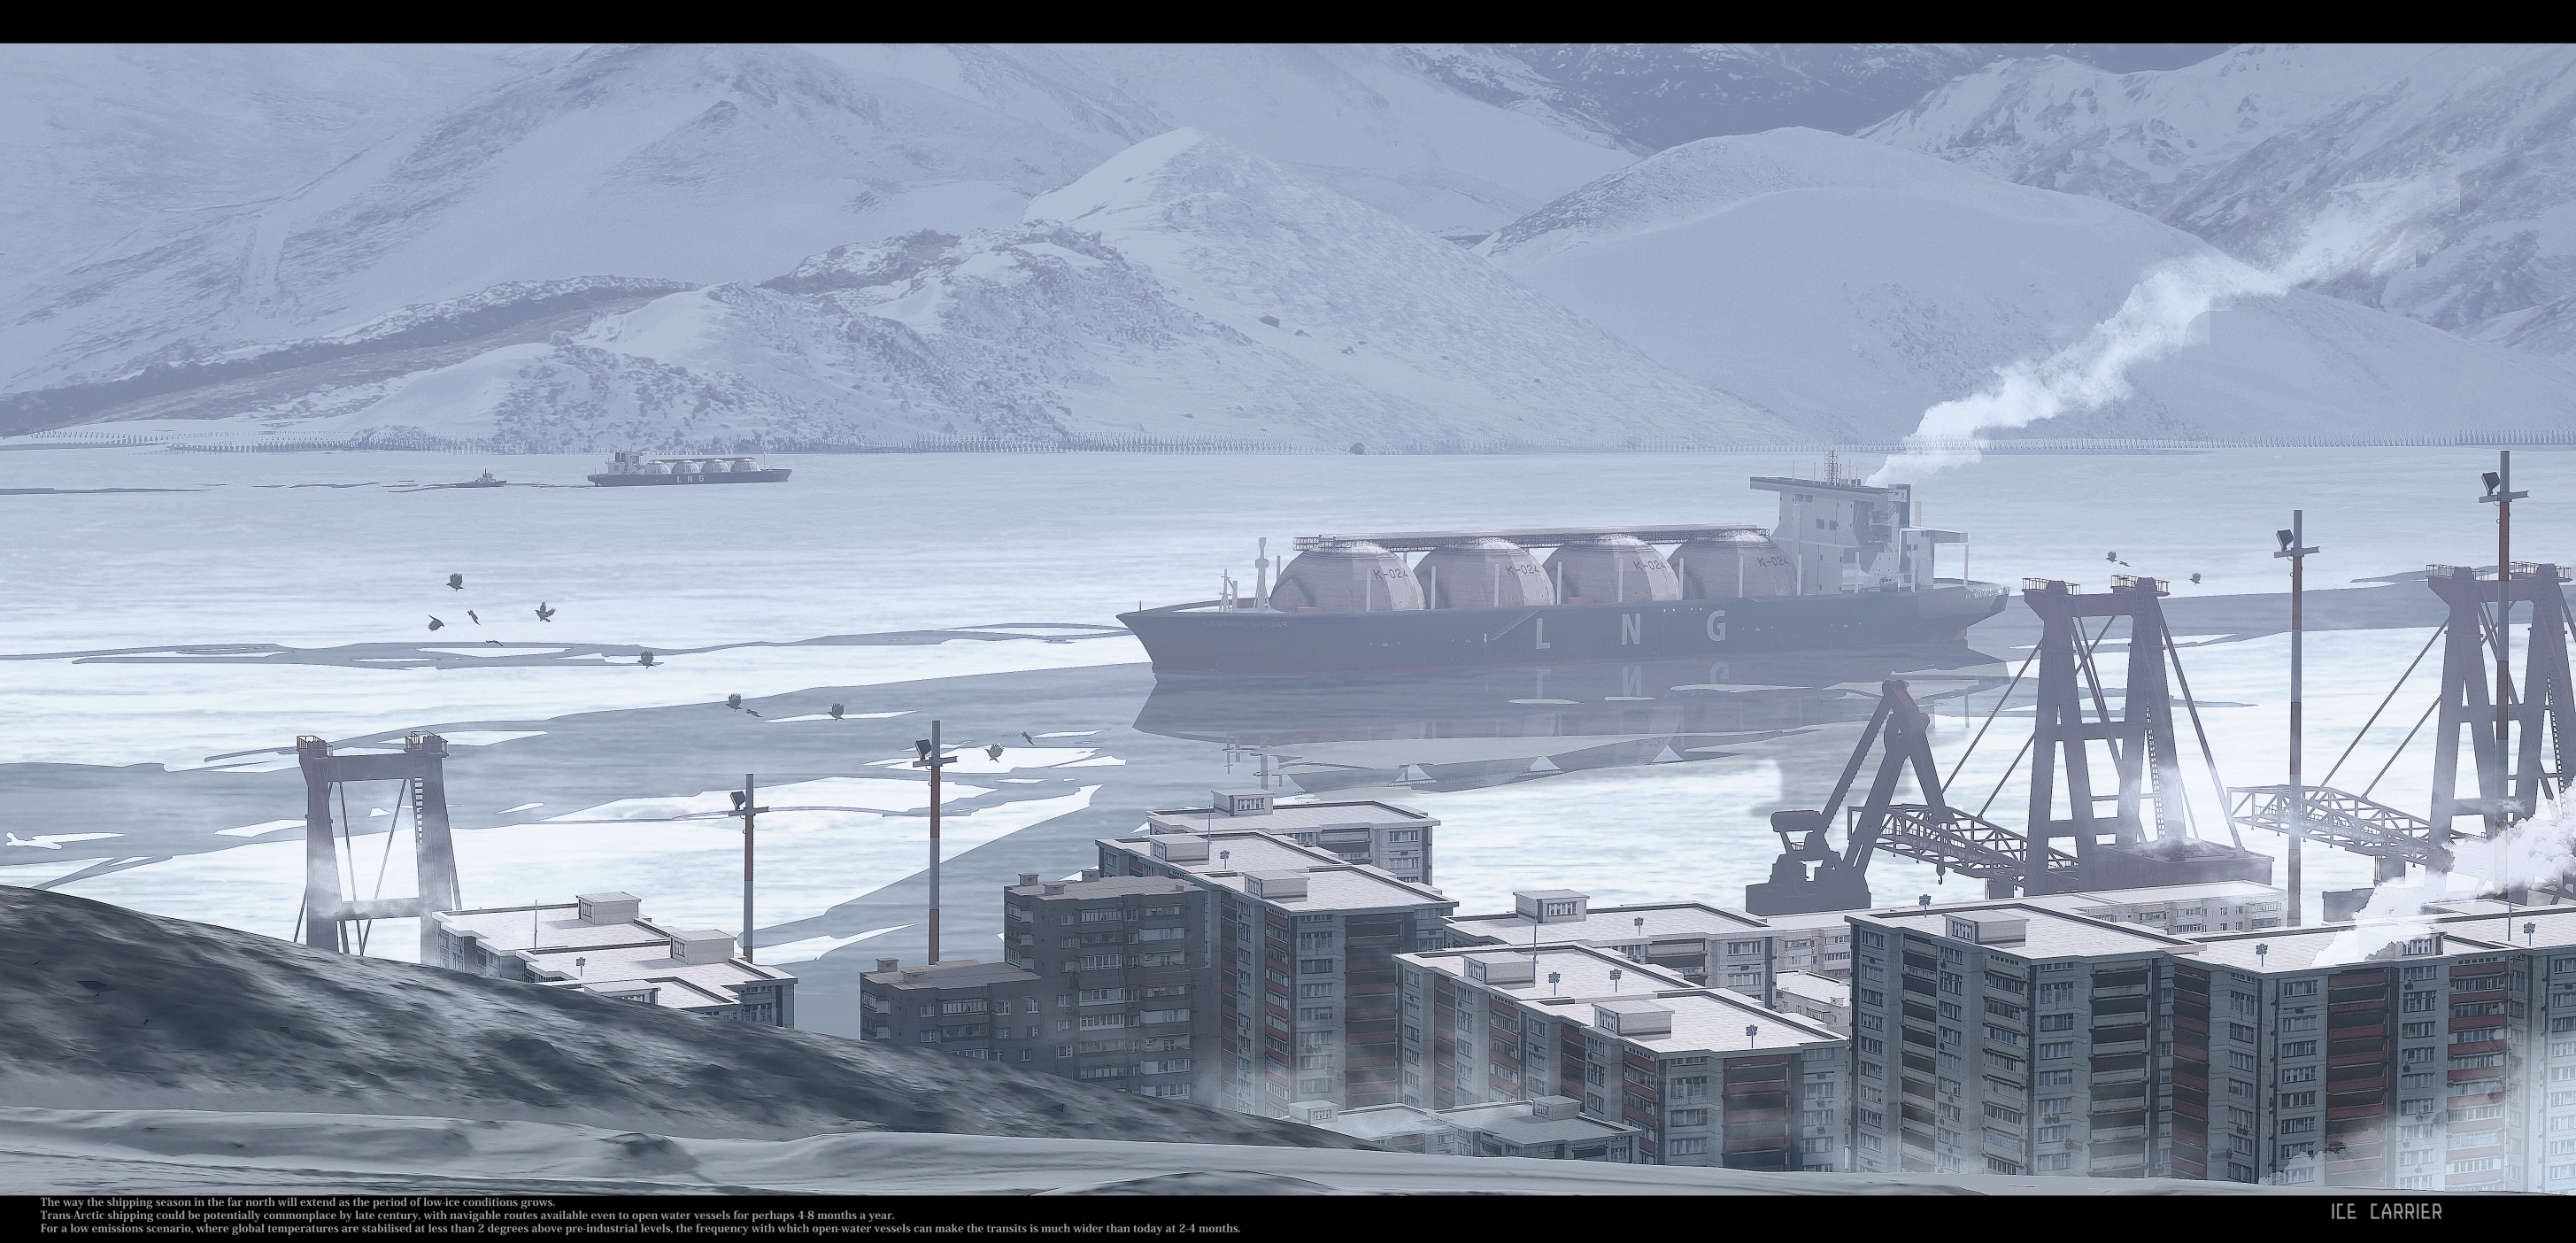 Anime Digital Art Artwork 2D Portrait Haguruma Dock Oil Tanker Snow 2910x1404